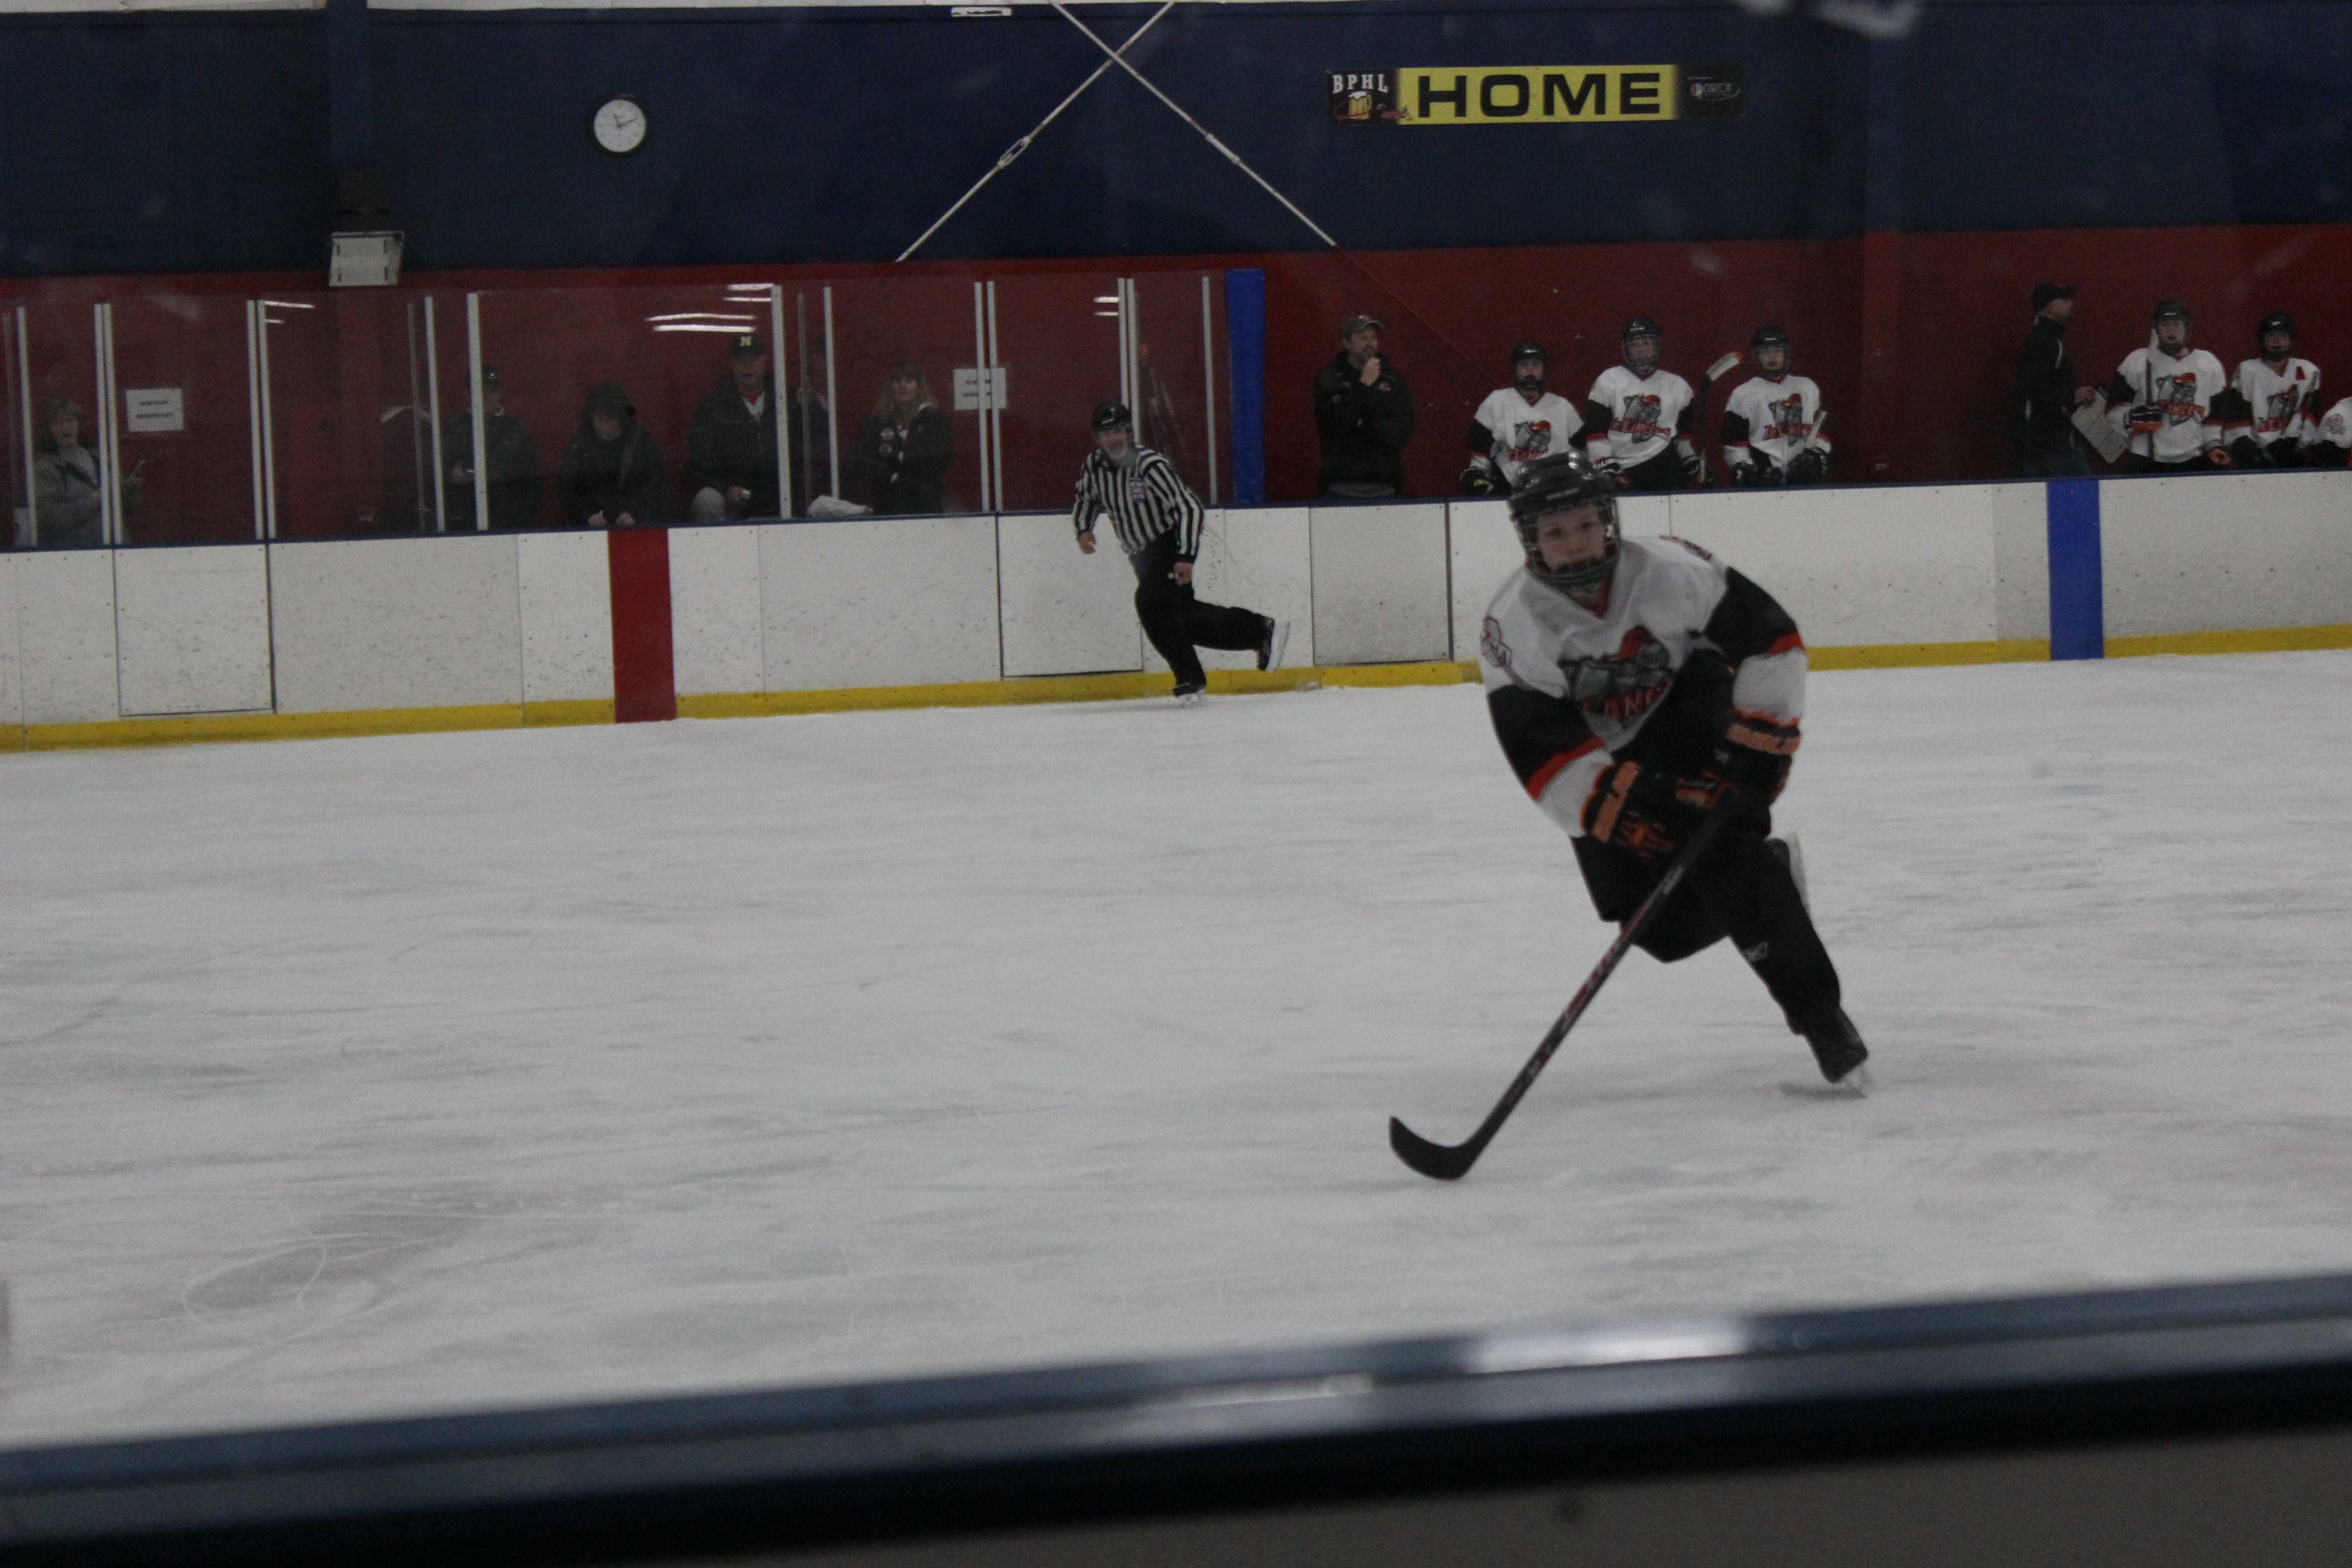 Deanna Dymond skates across the ice rink during hockey practice. Photo by Brooke Riley